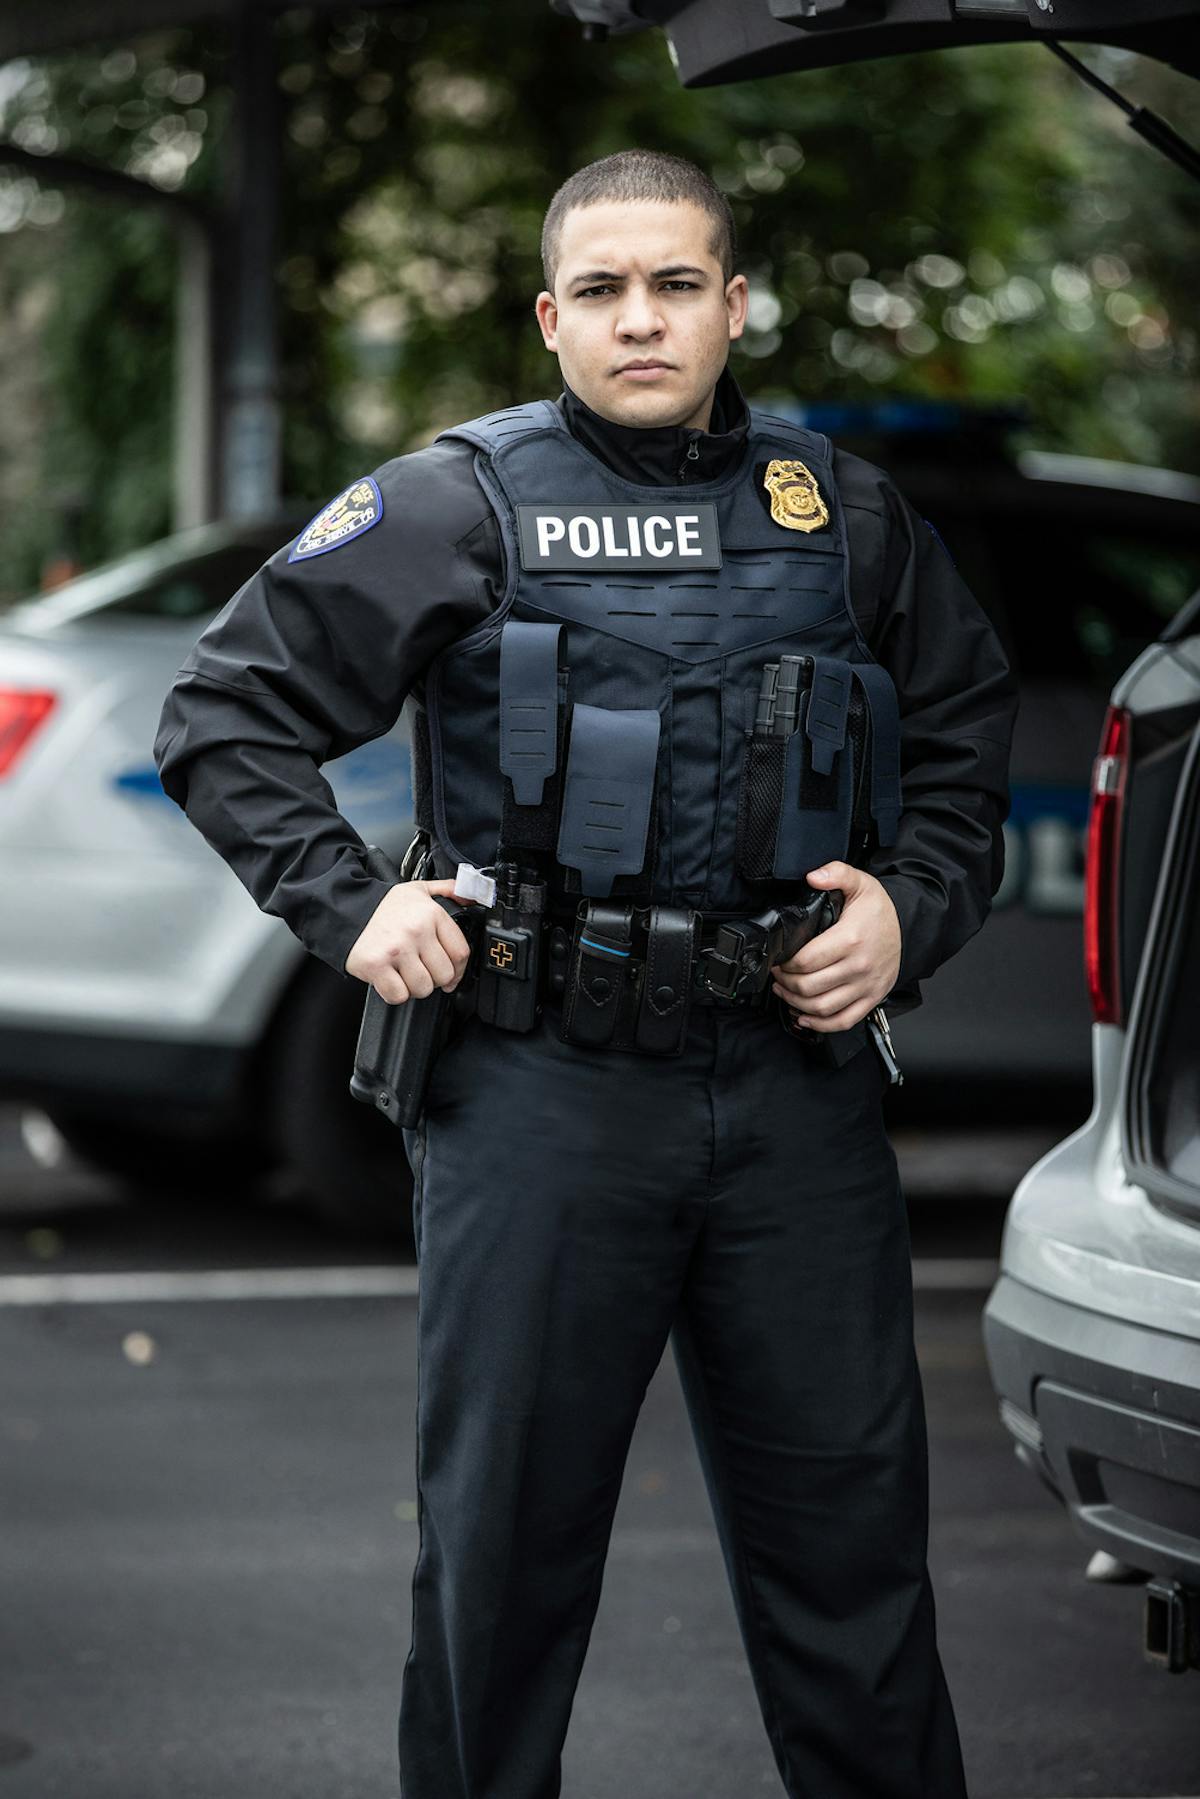 Current Trends in Law Enforcement Uniforms